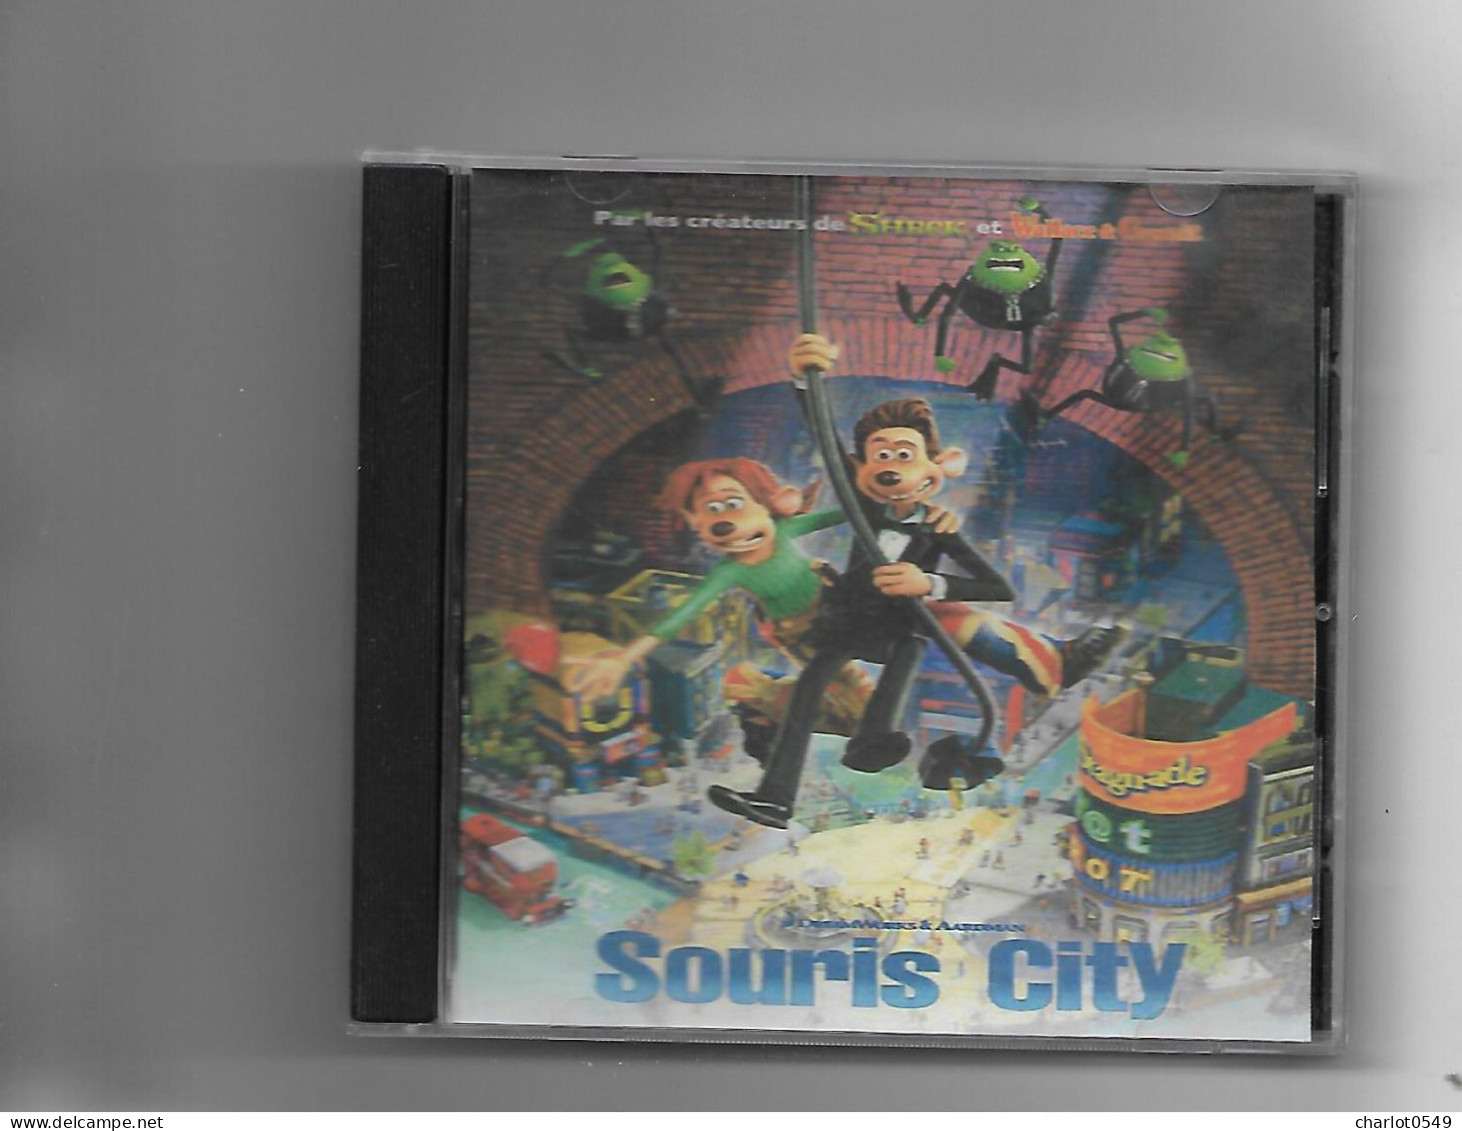 Souris City - Children & Family